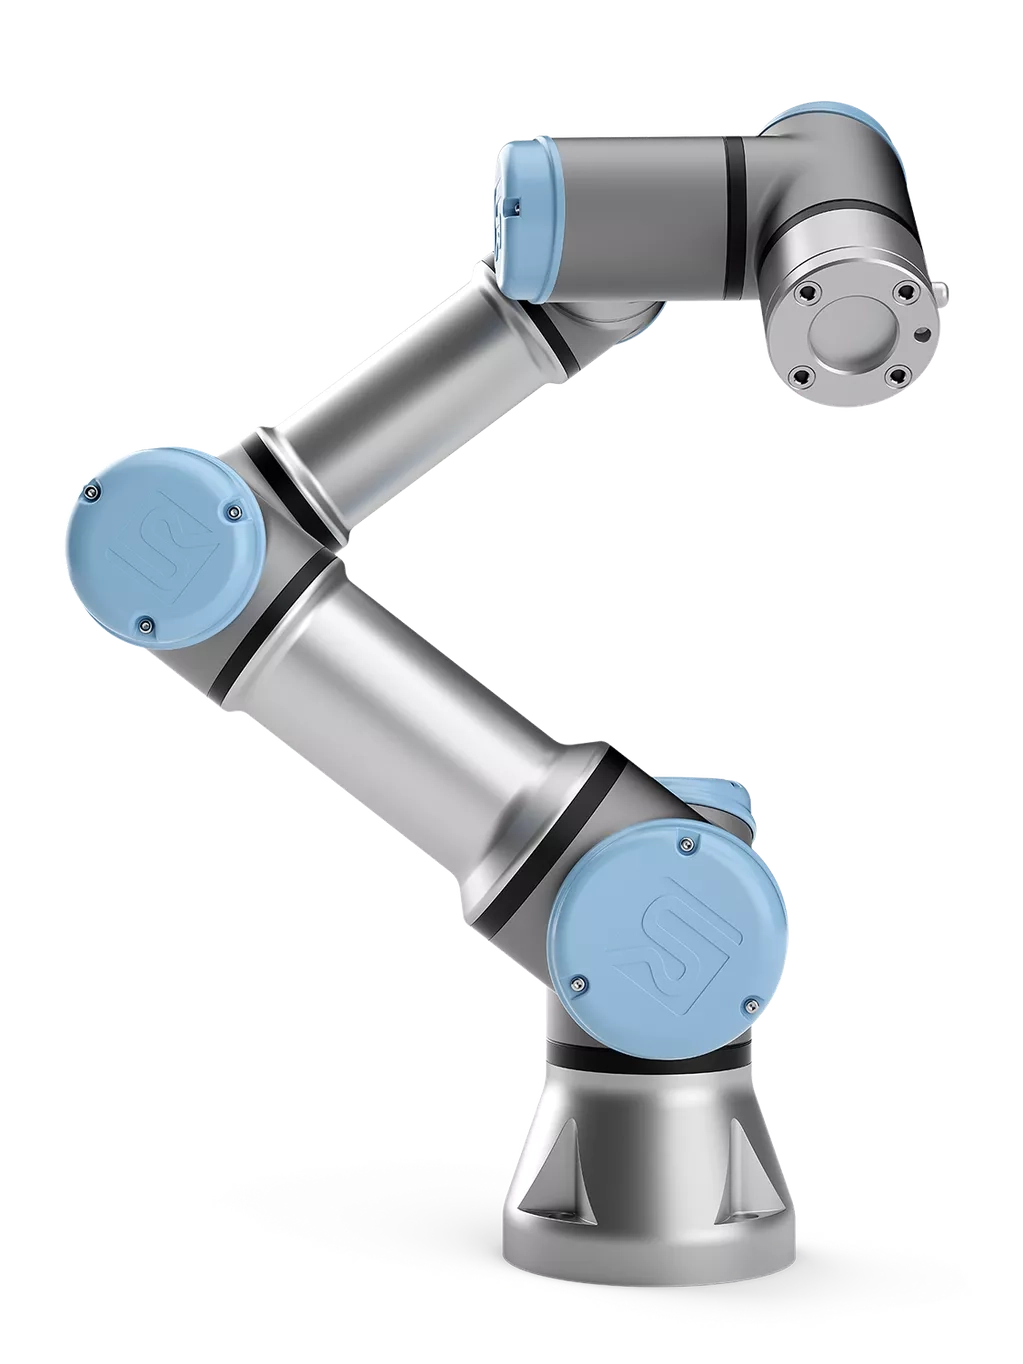 An articulated robotic arm